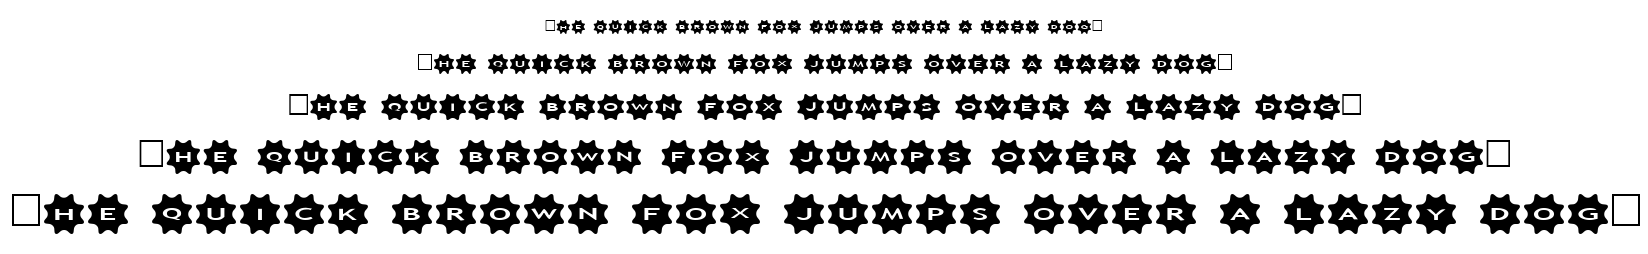 alphaahapes stars 4 font